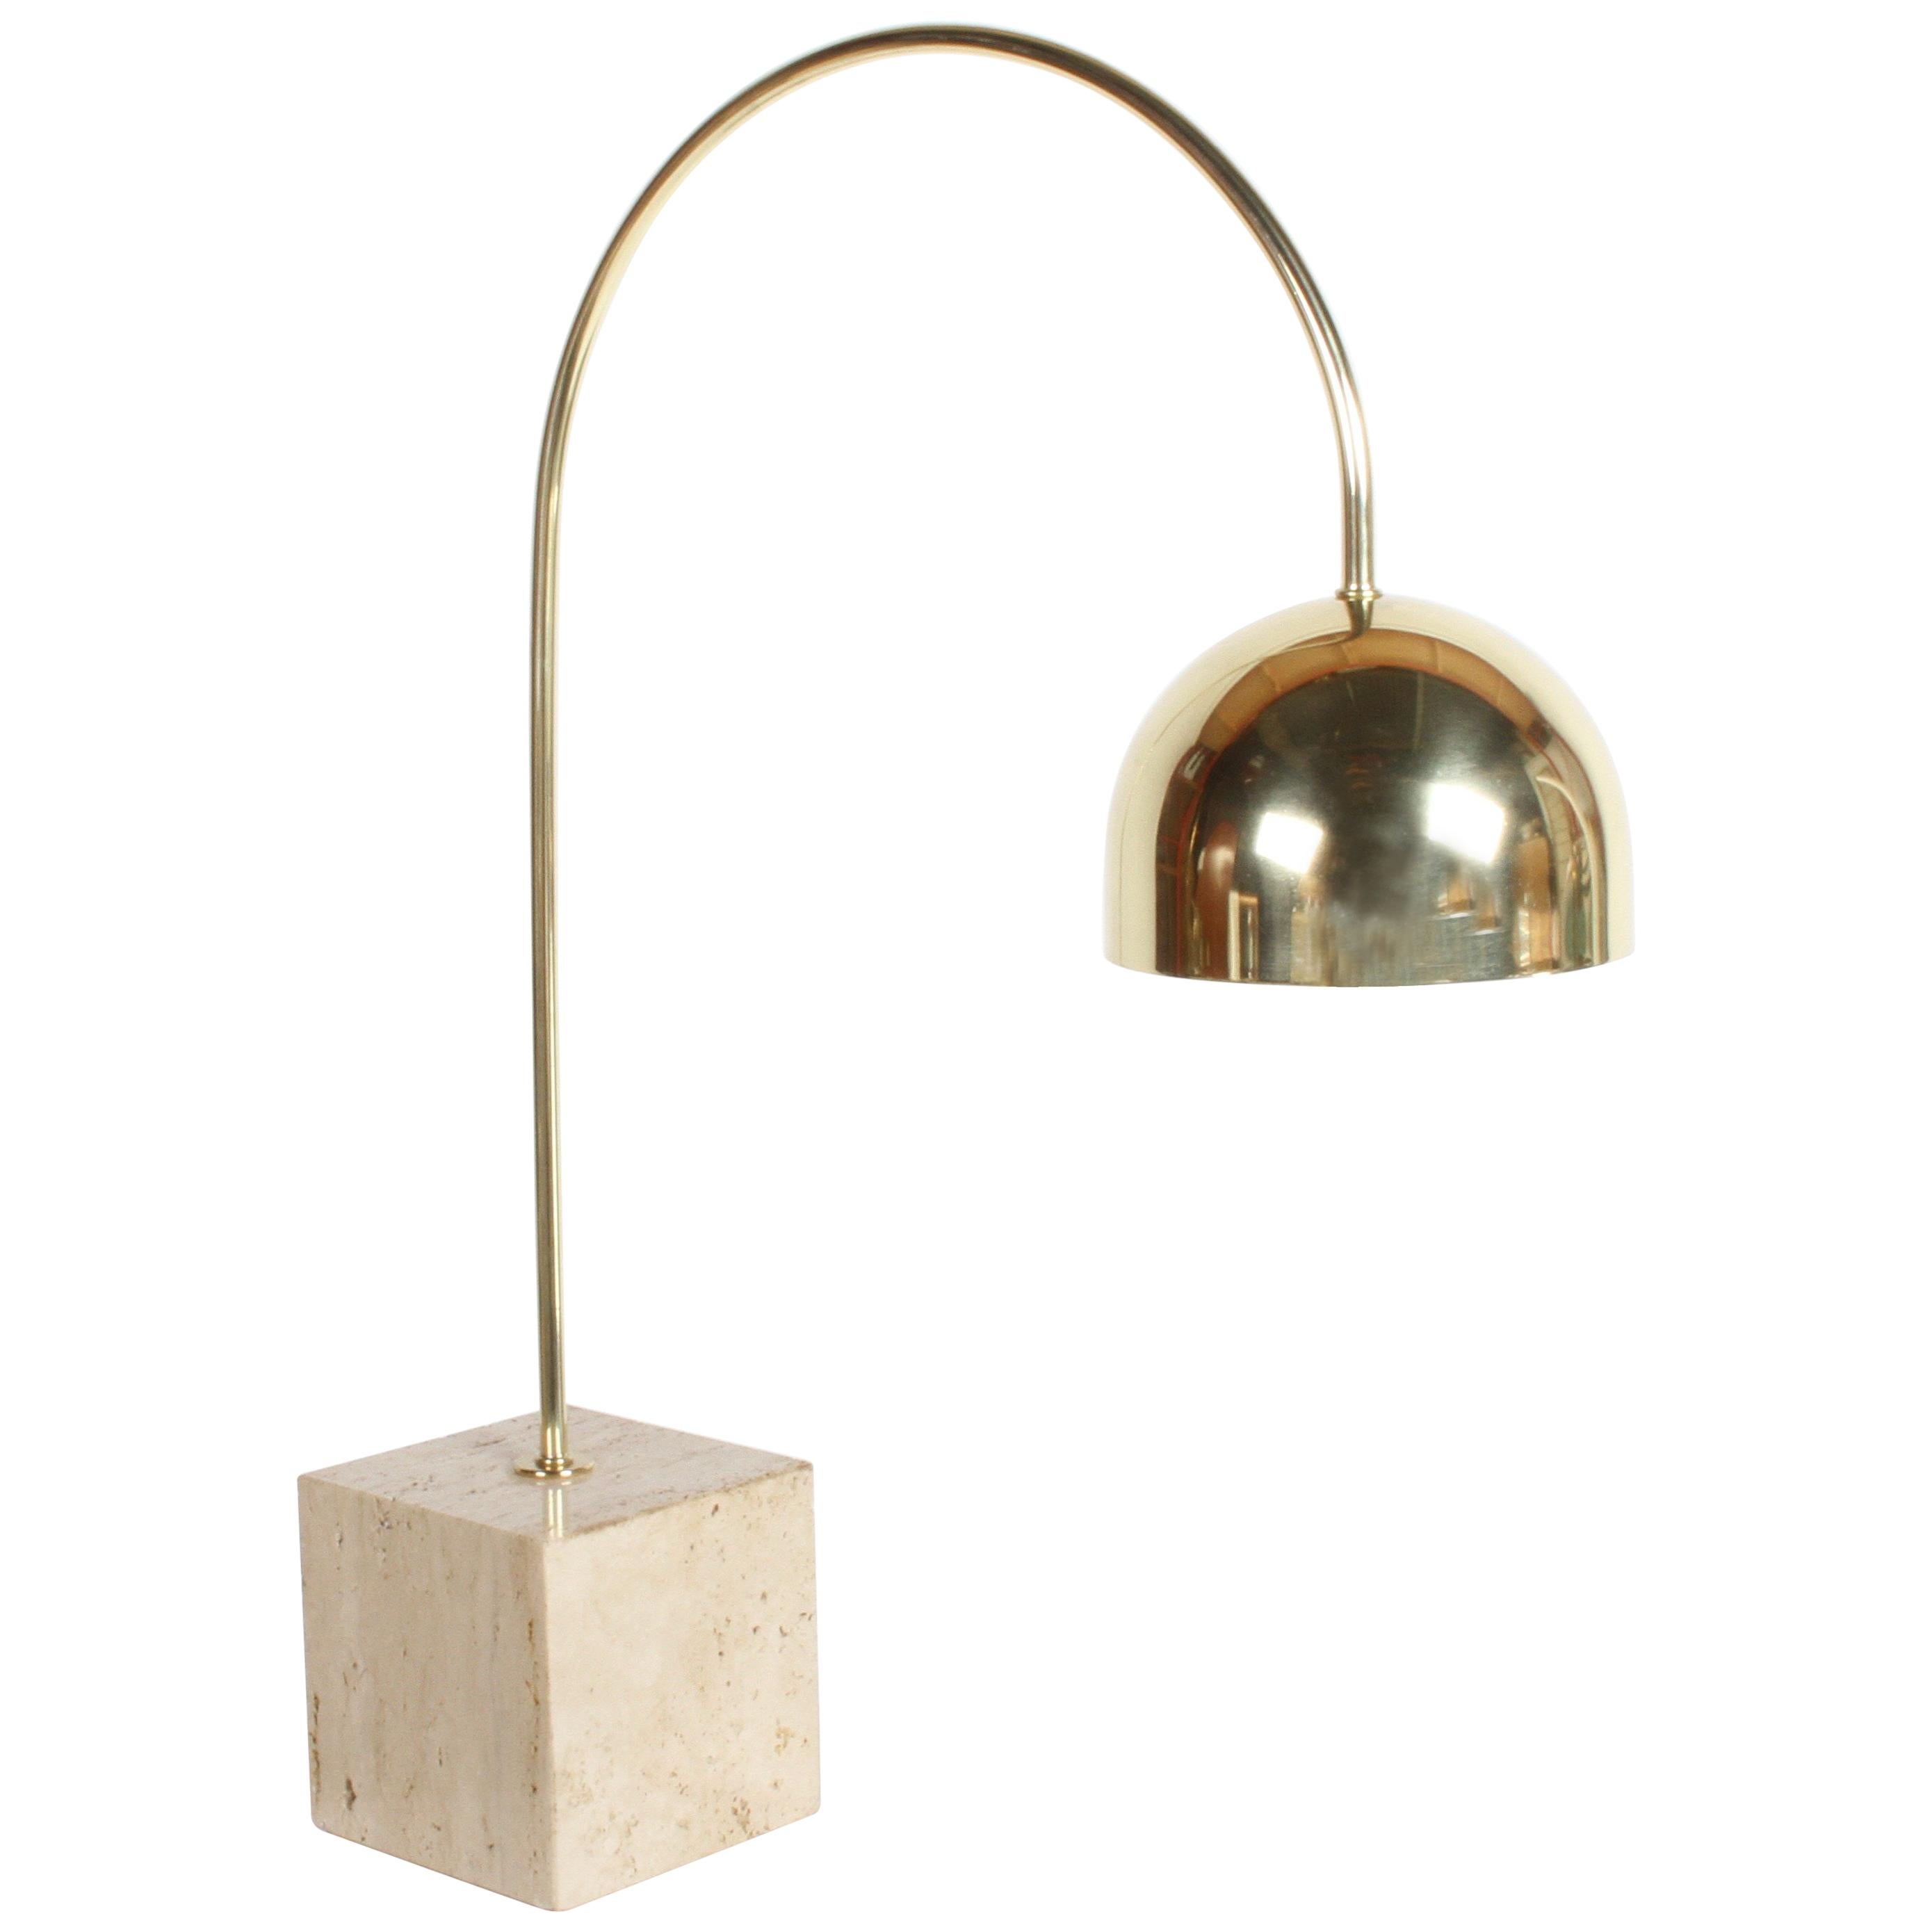 Guzzini Italian Brass Arc Table Lamp on Travertine Base, Restored